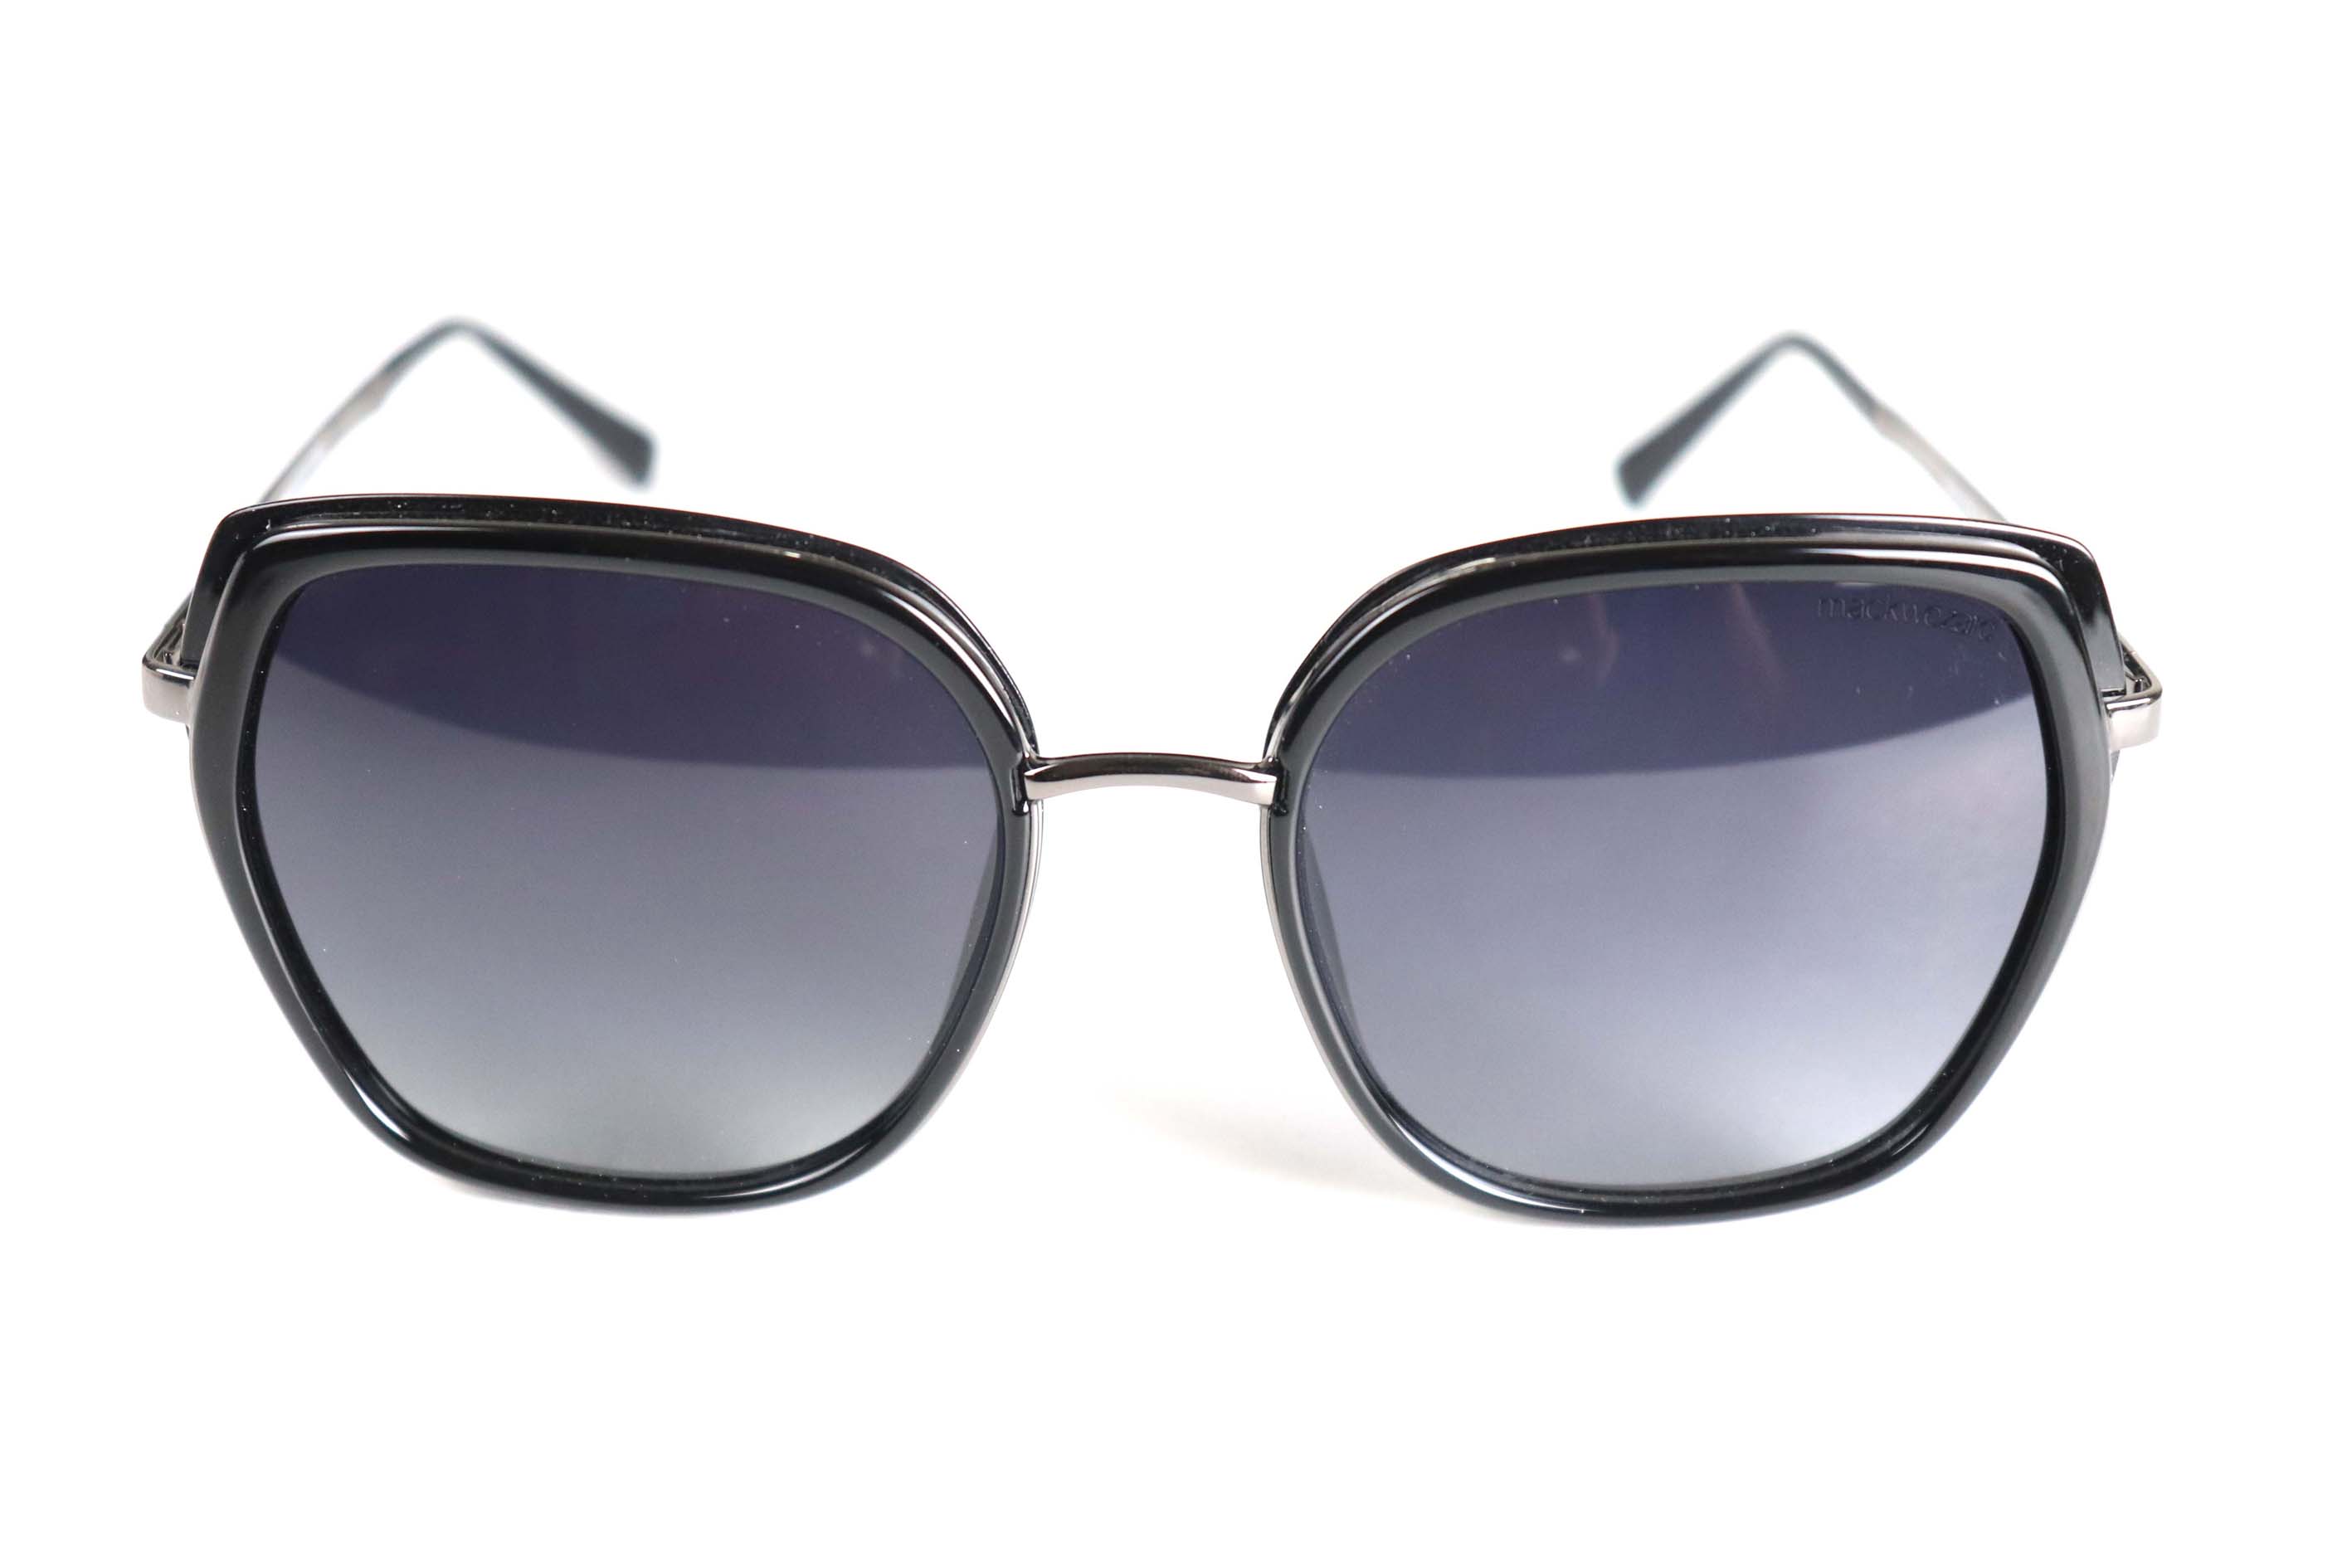 Mackwezard Sunglasses-GSA8152-S-C1-59-18-145